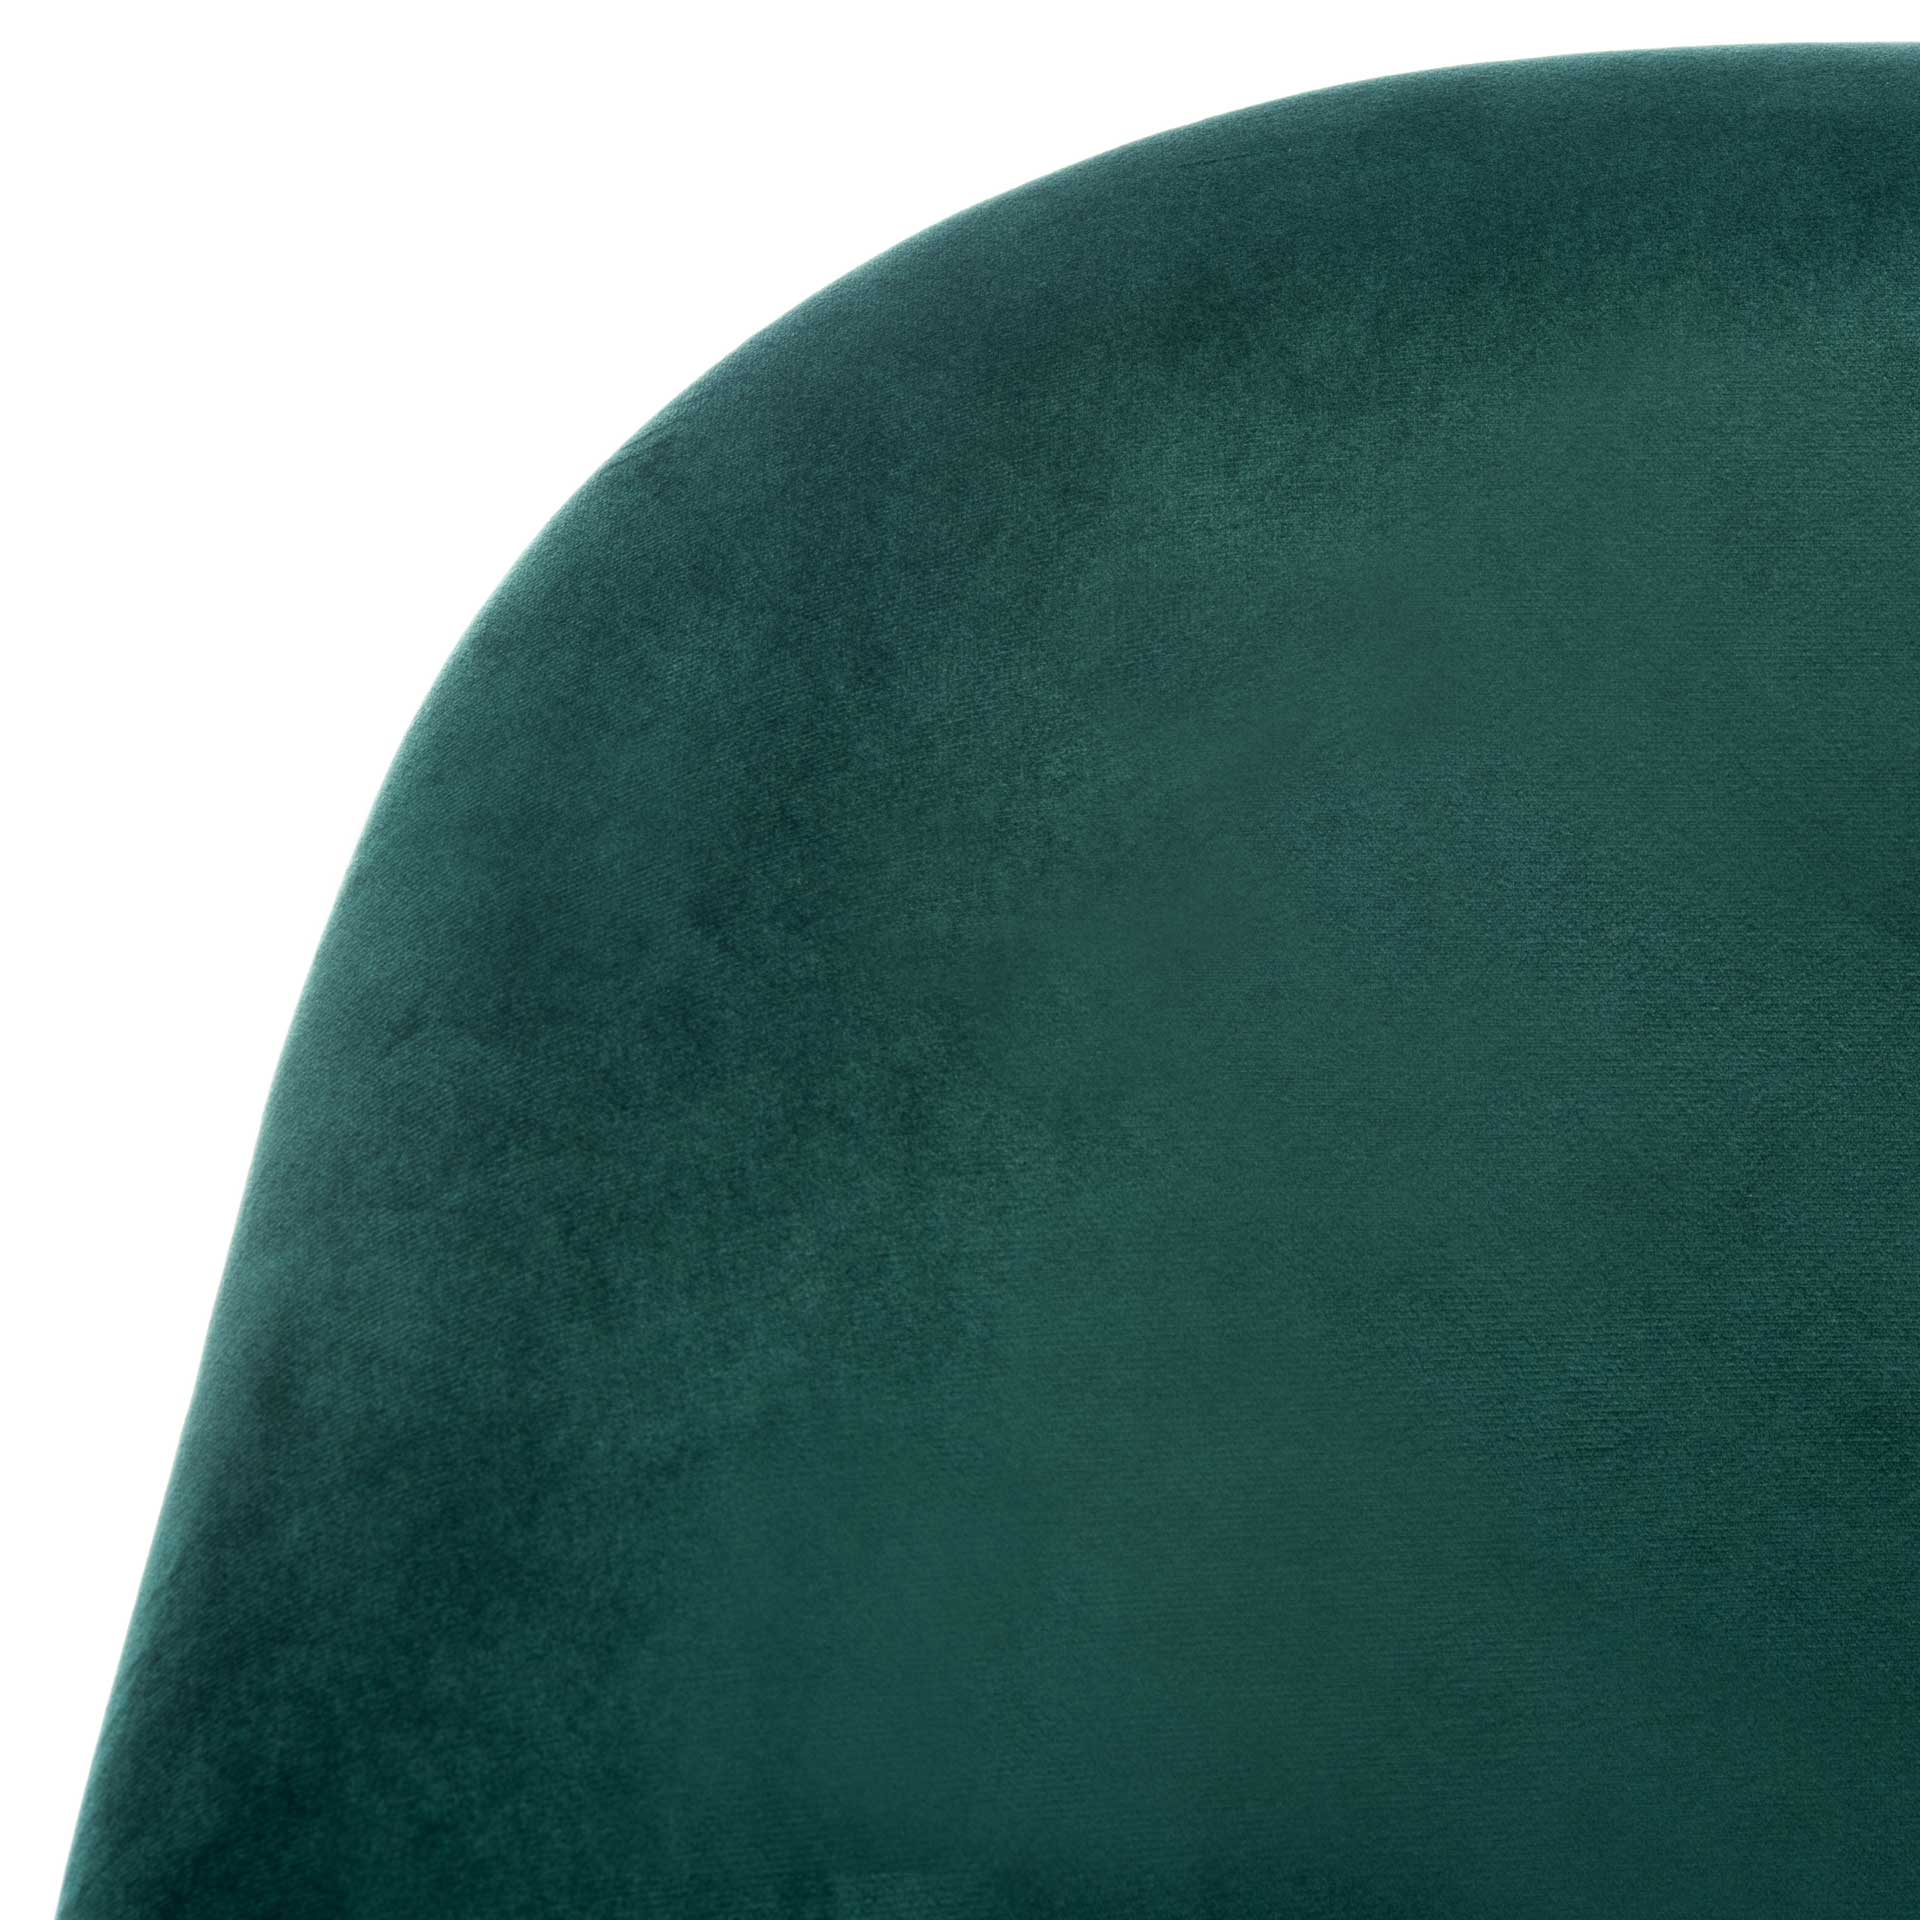 Brendan Mid Century Arm Chair Emerald/Brass